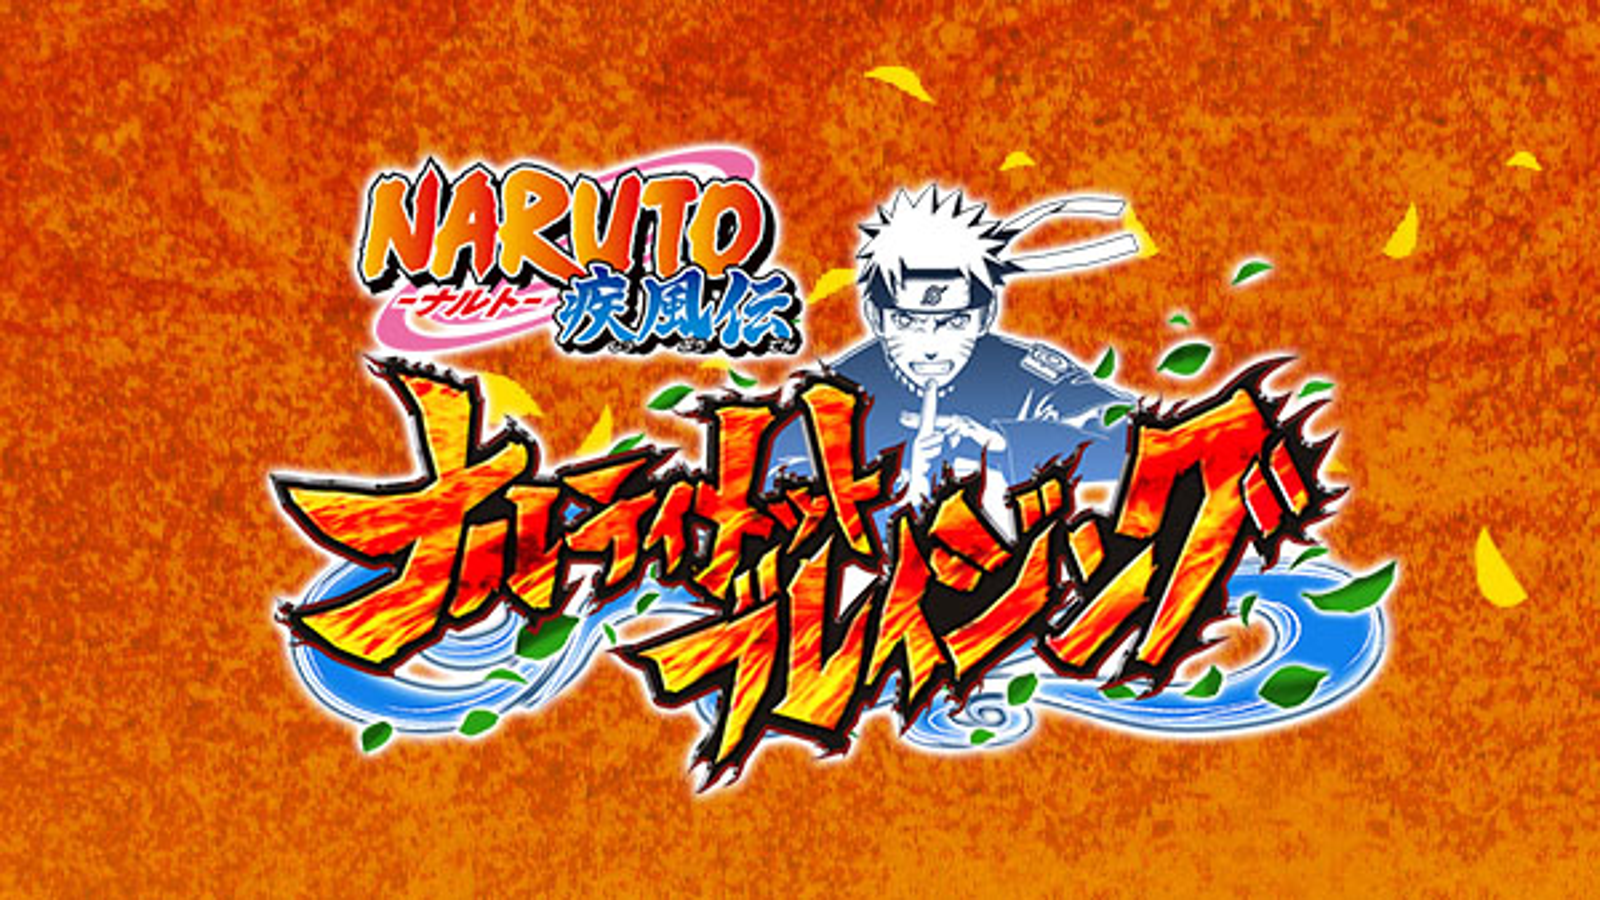 Vai terminar Naruto Shippuden: Ultimate Ninja Blazing